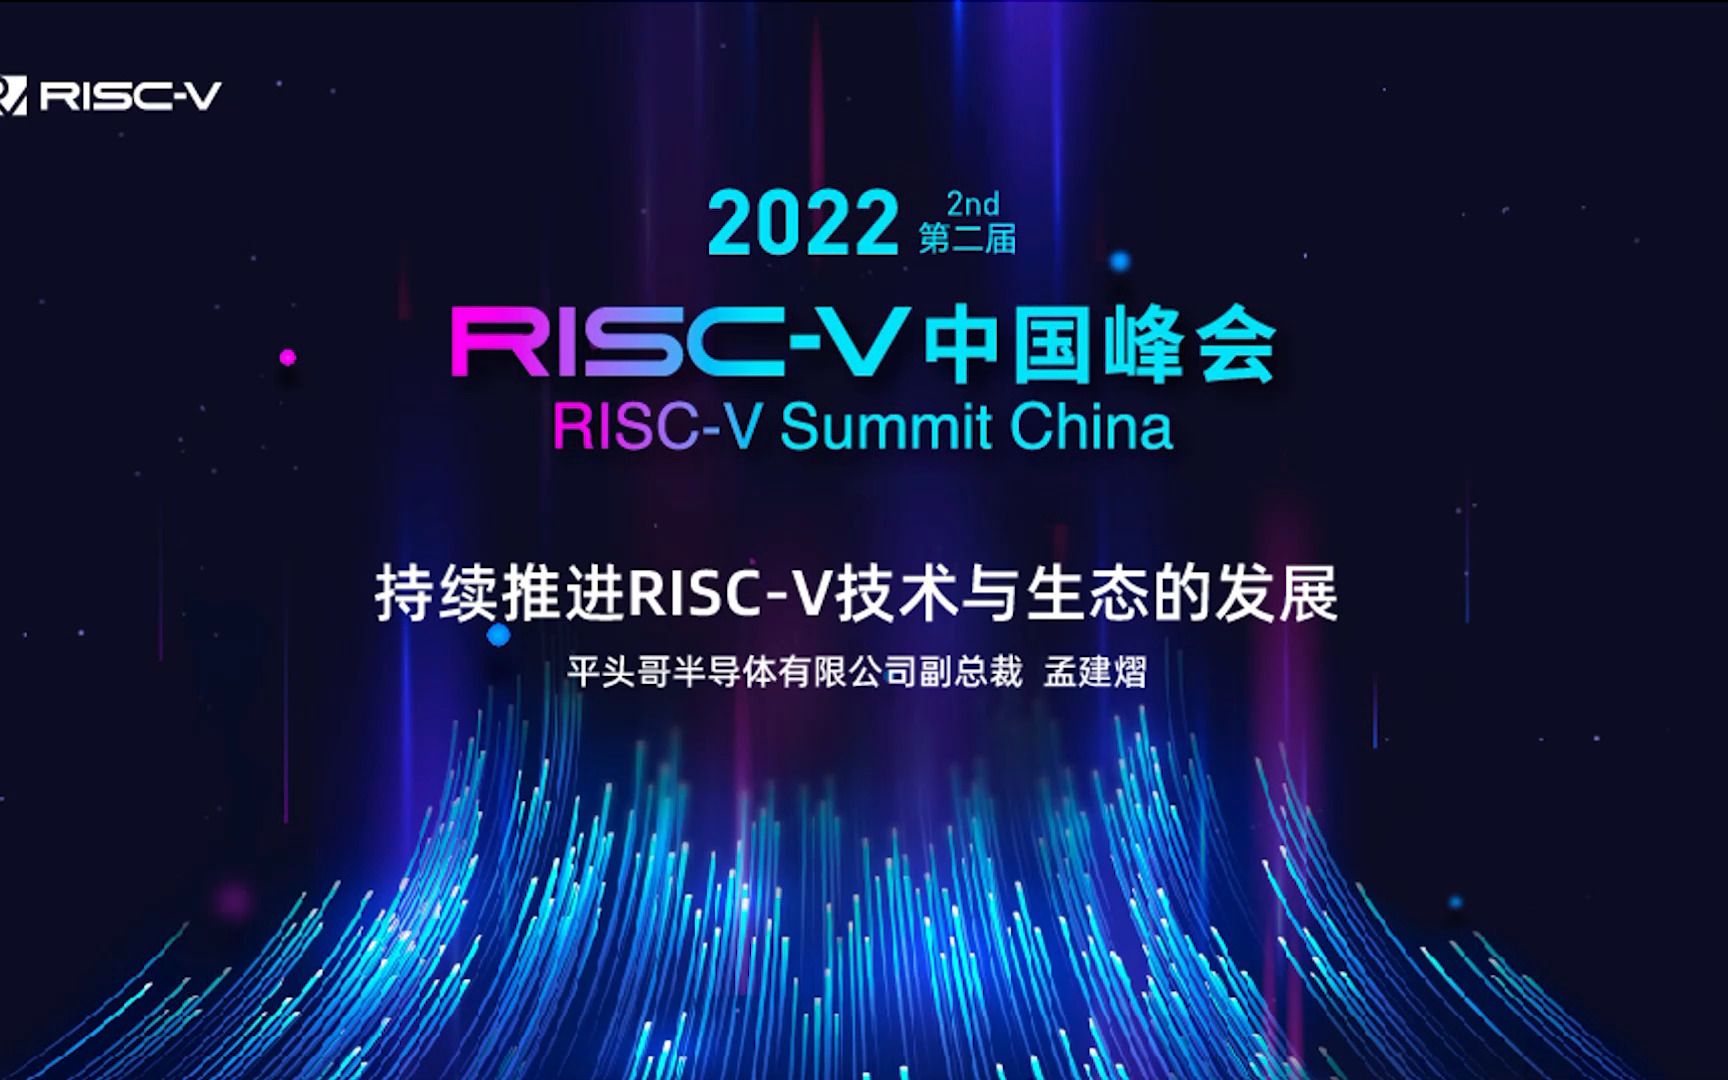 Keynote_ 持续推进RISC-V技术与生态发展 - 孟建熠，平头哥半导体副总裁 - RISC-1